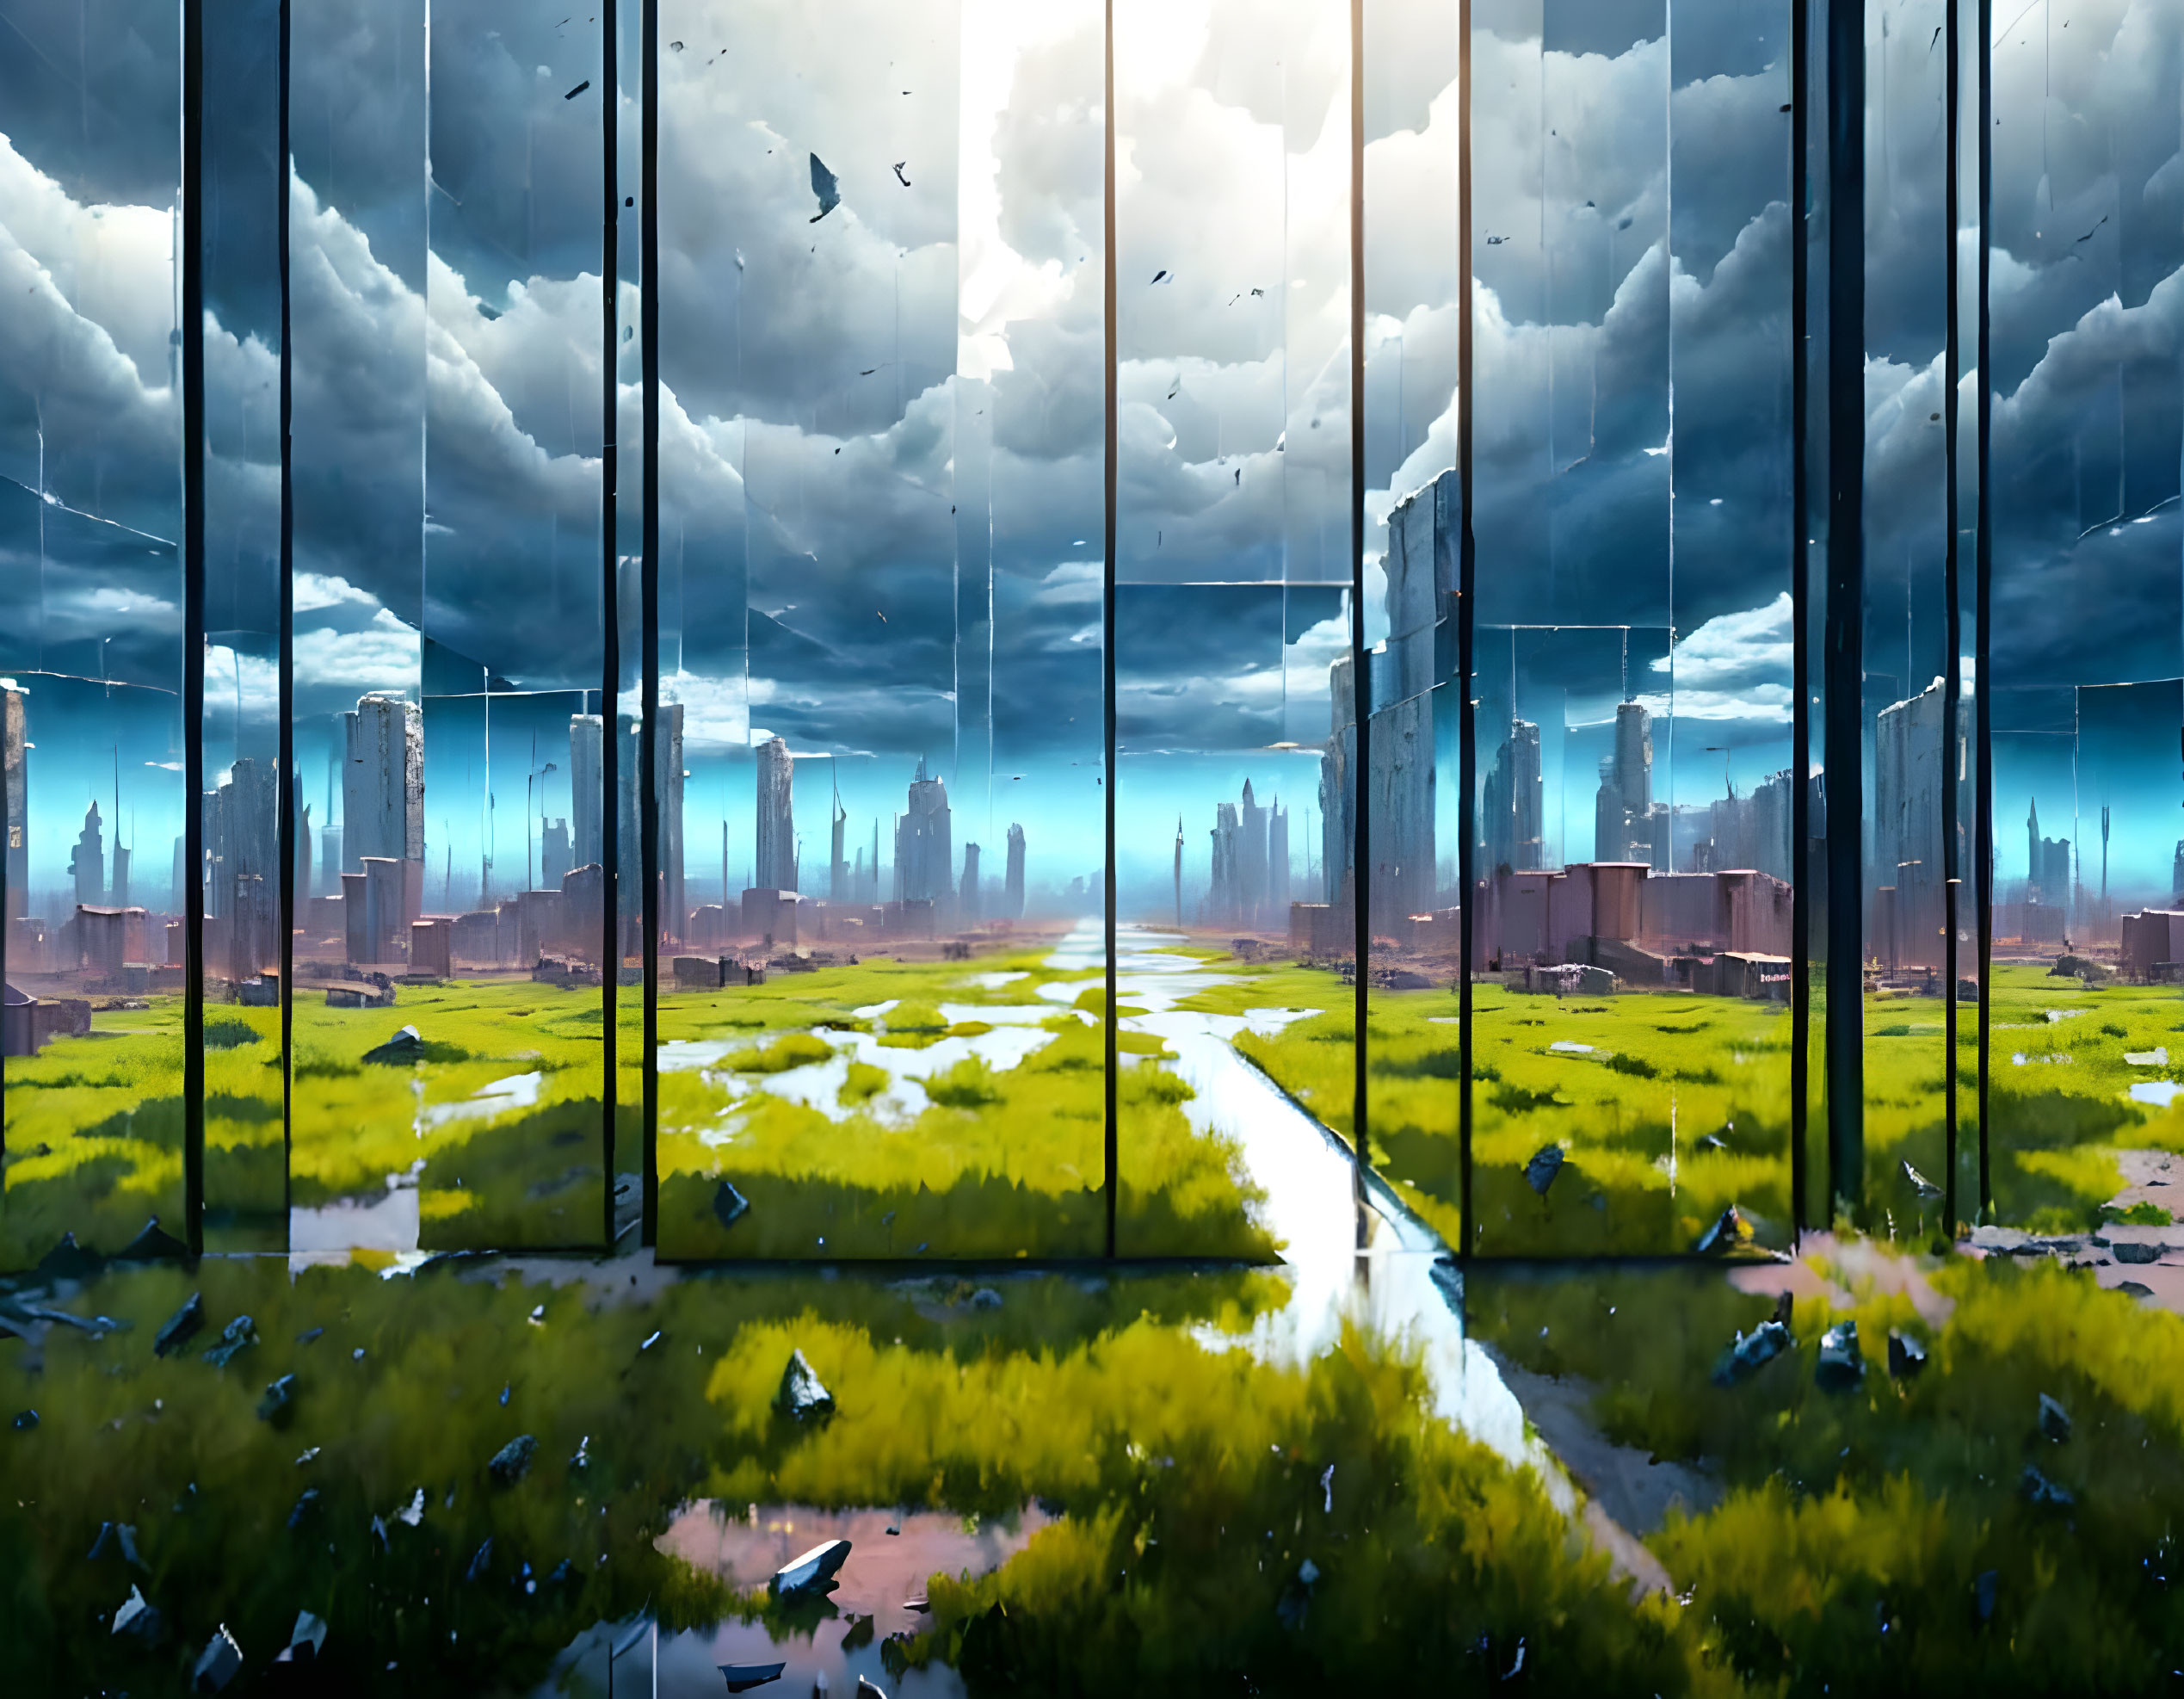 Futuristic glass room with panoramic city skyline views under stormy sky